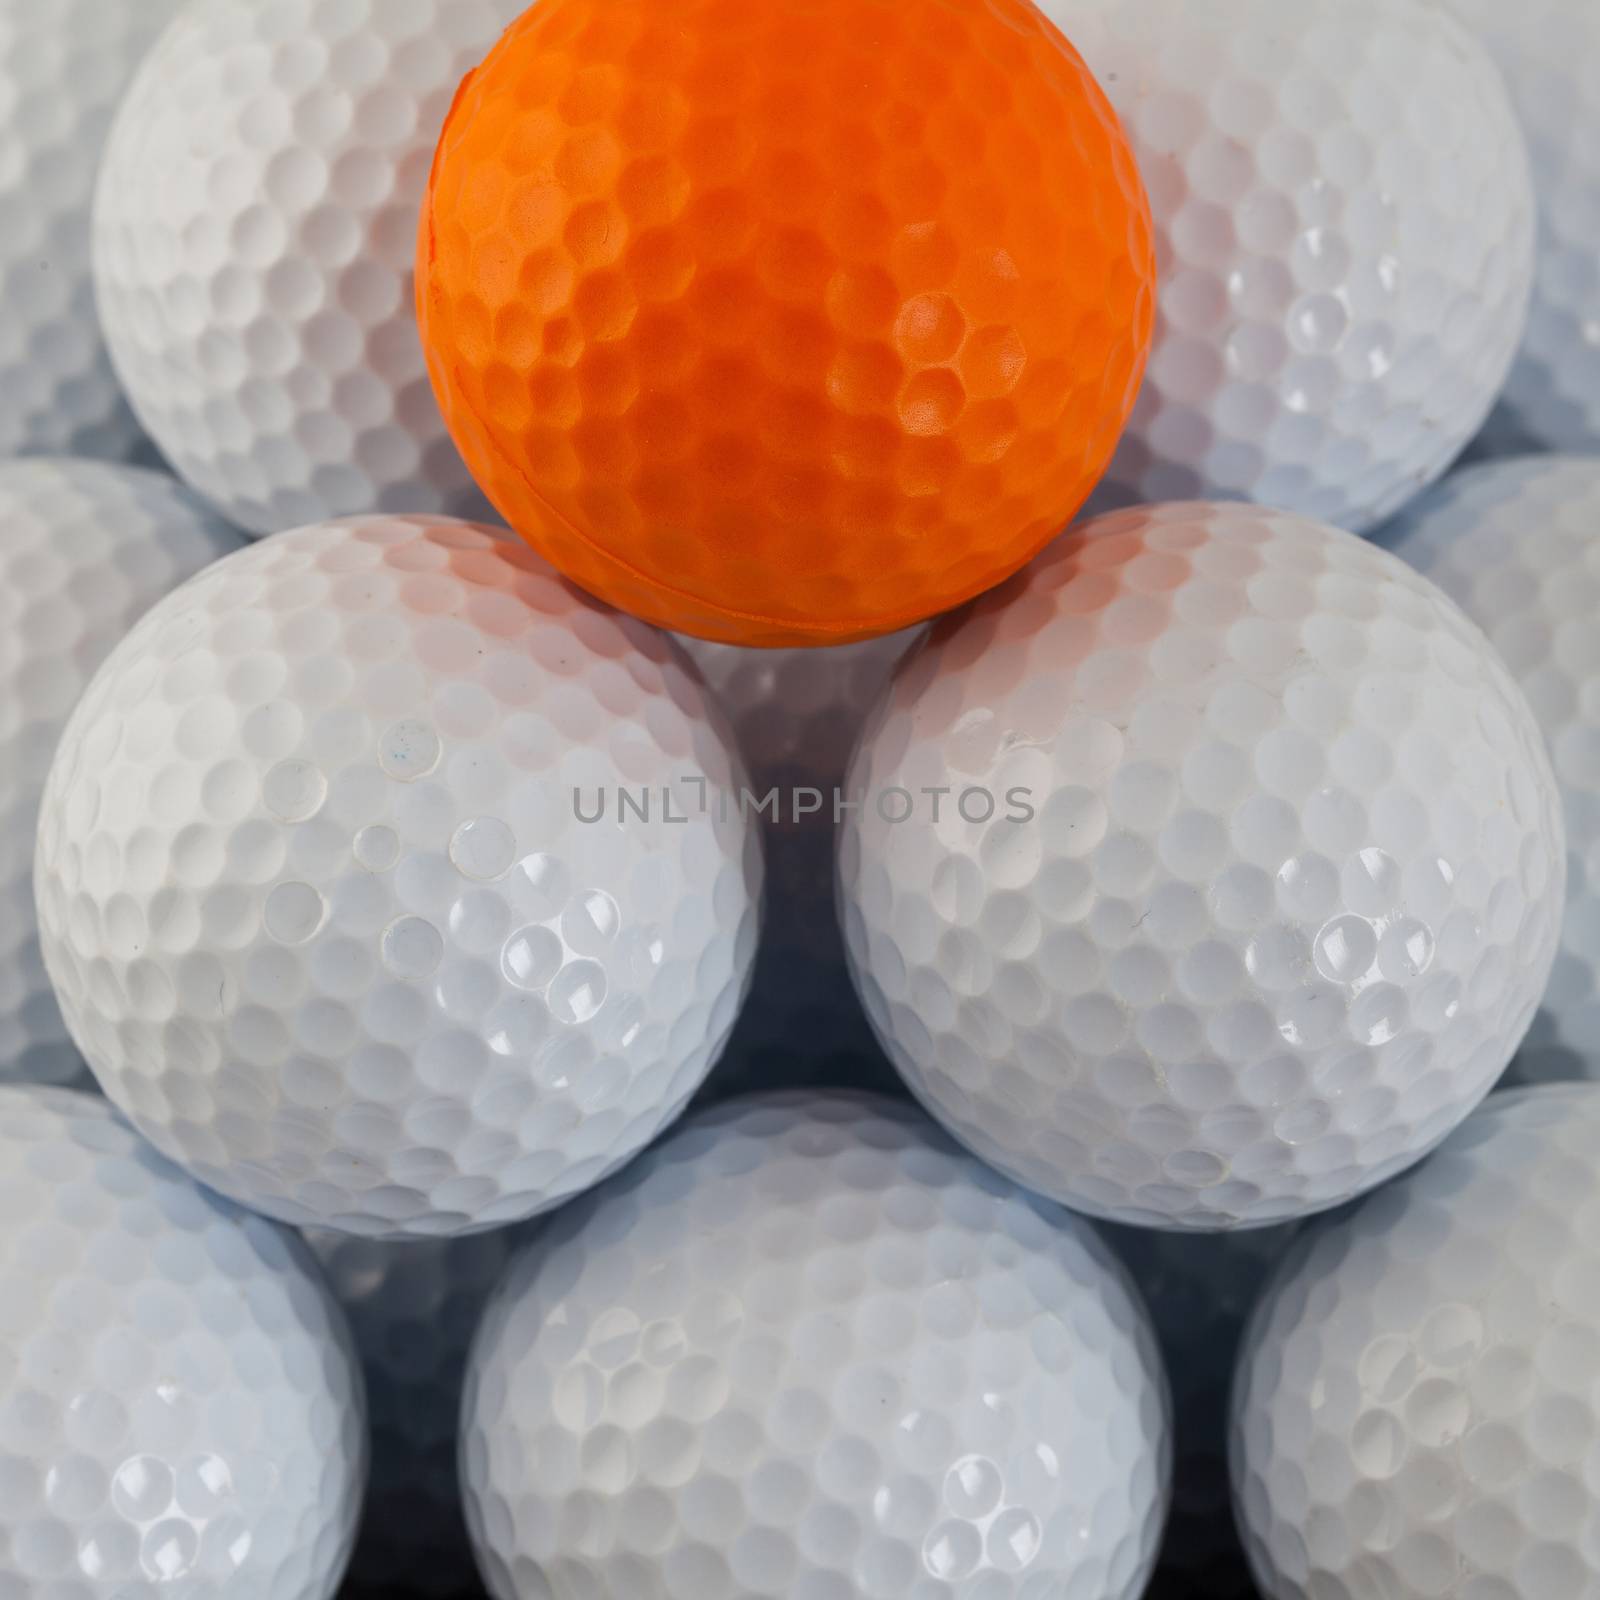 Pyramid of different golf balls